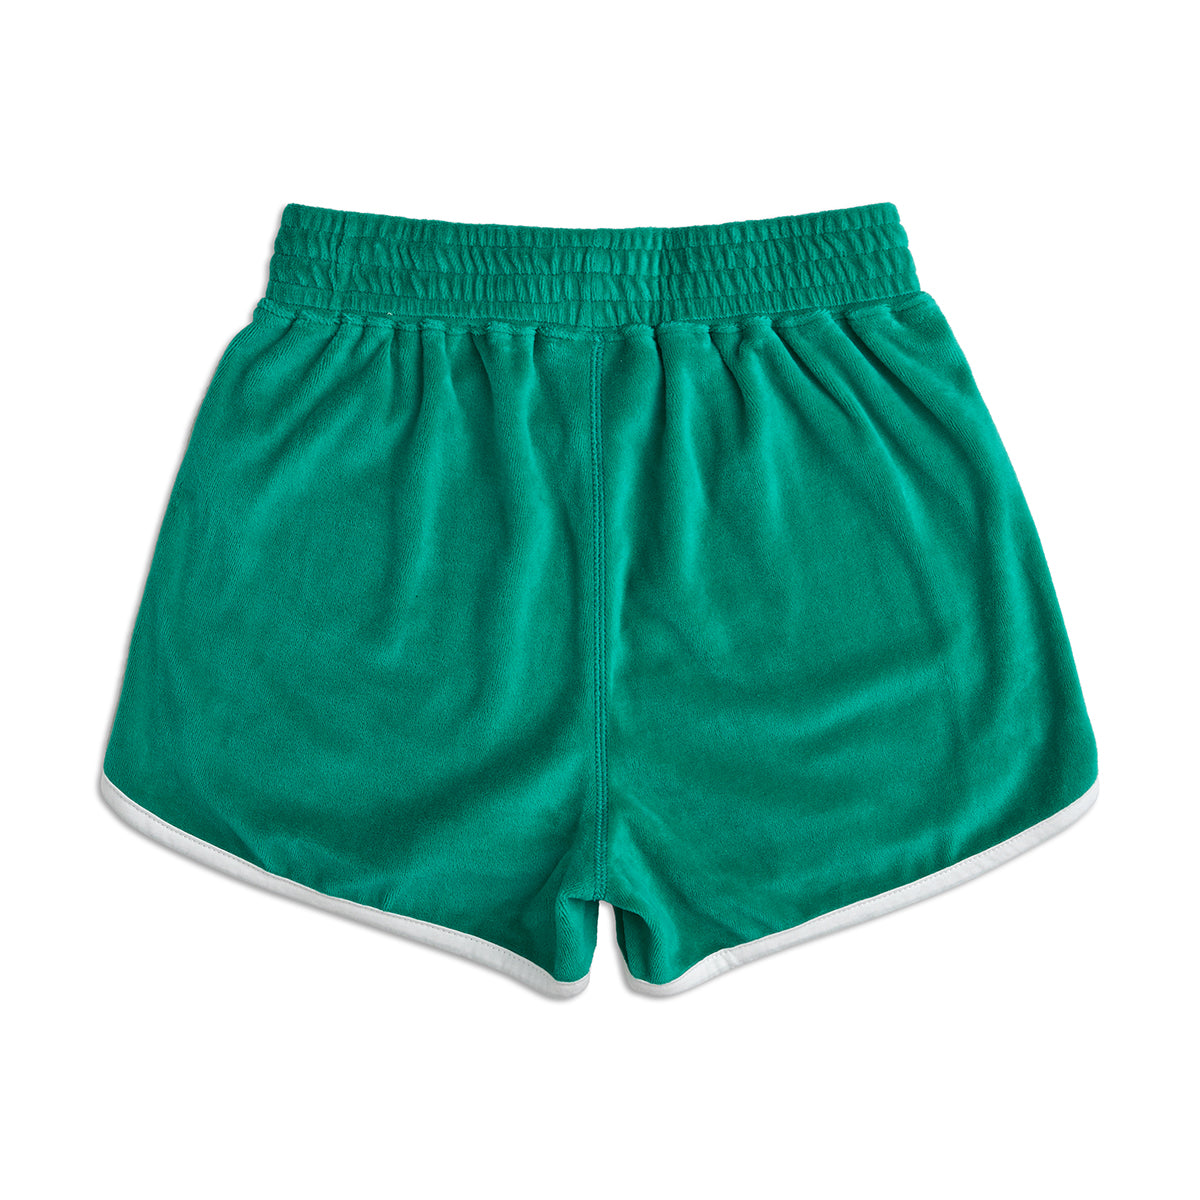 Aloha Velours Shorts - Green Teal